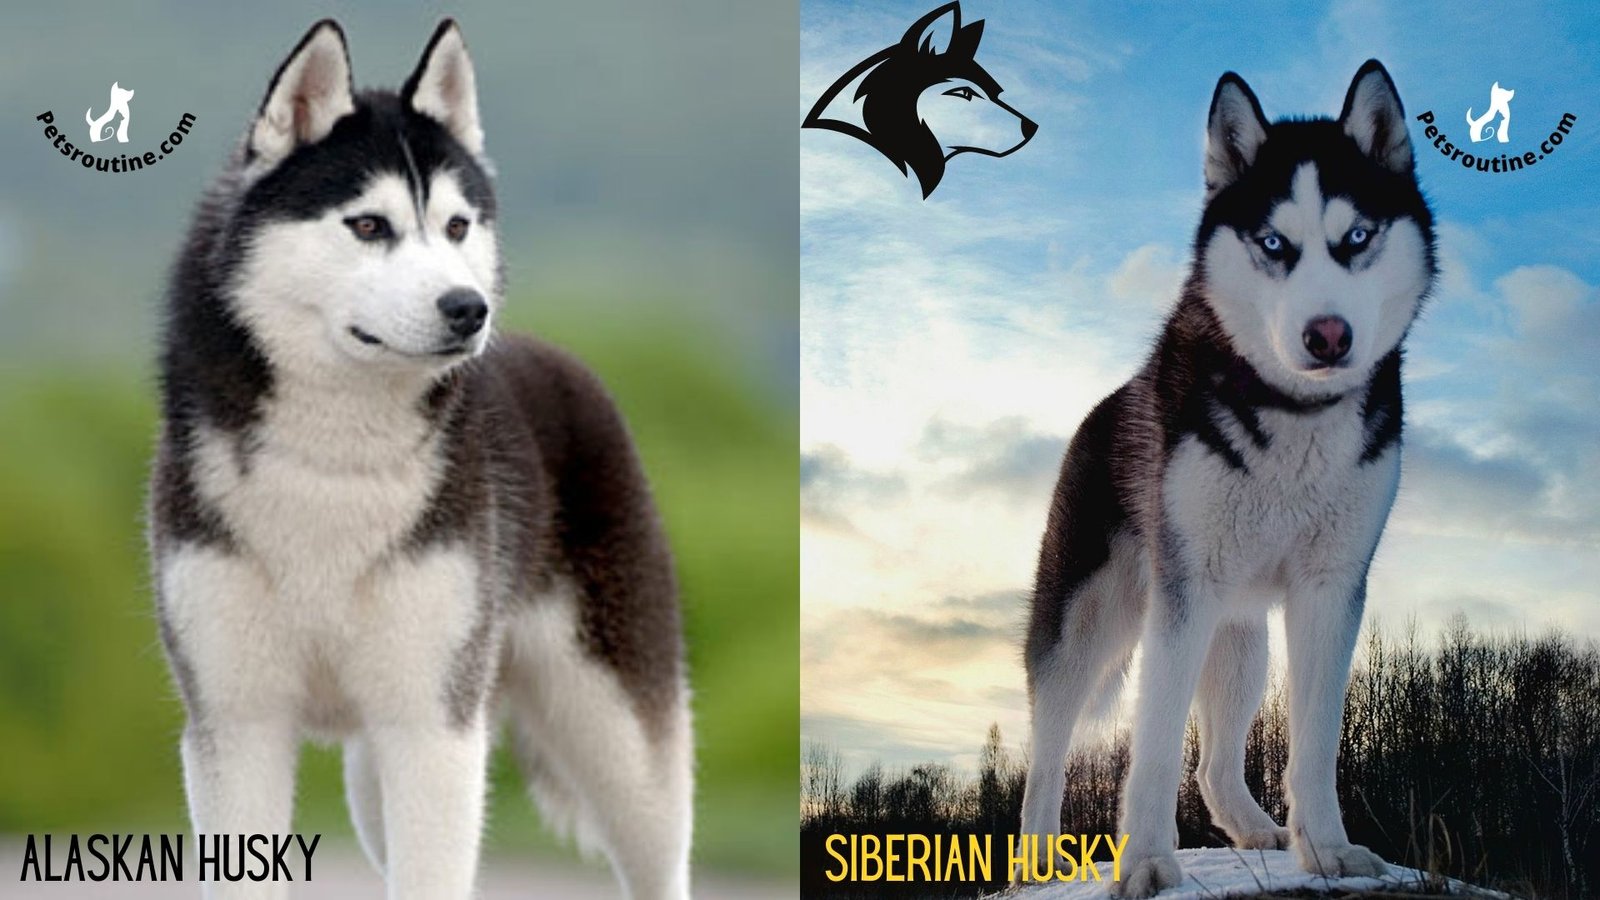 Alaskan husky vs Siberian husky